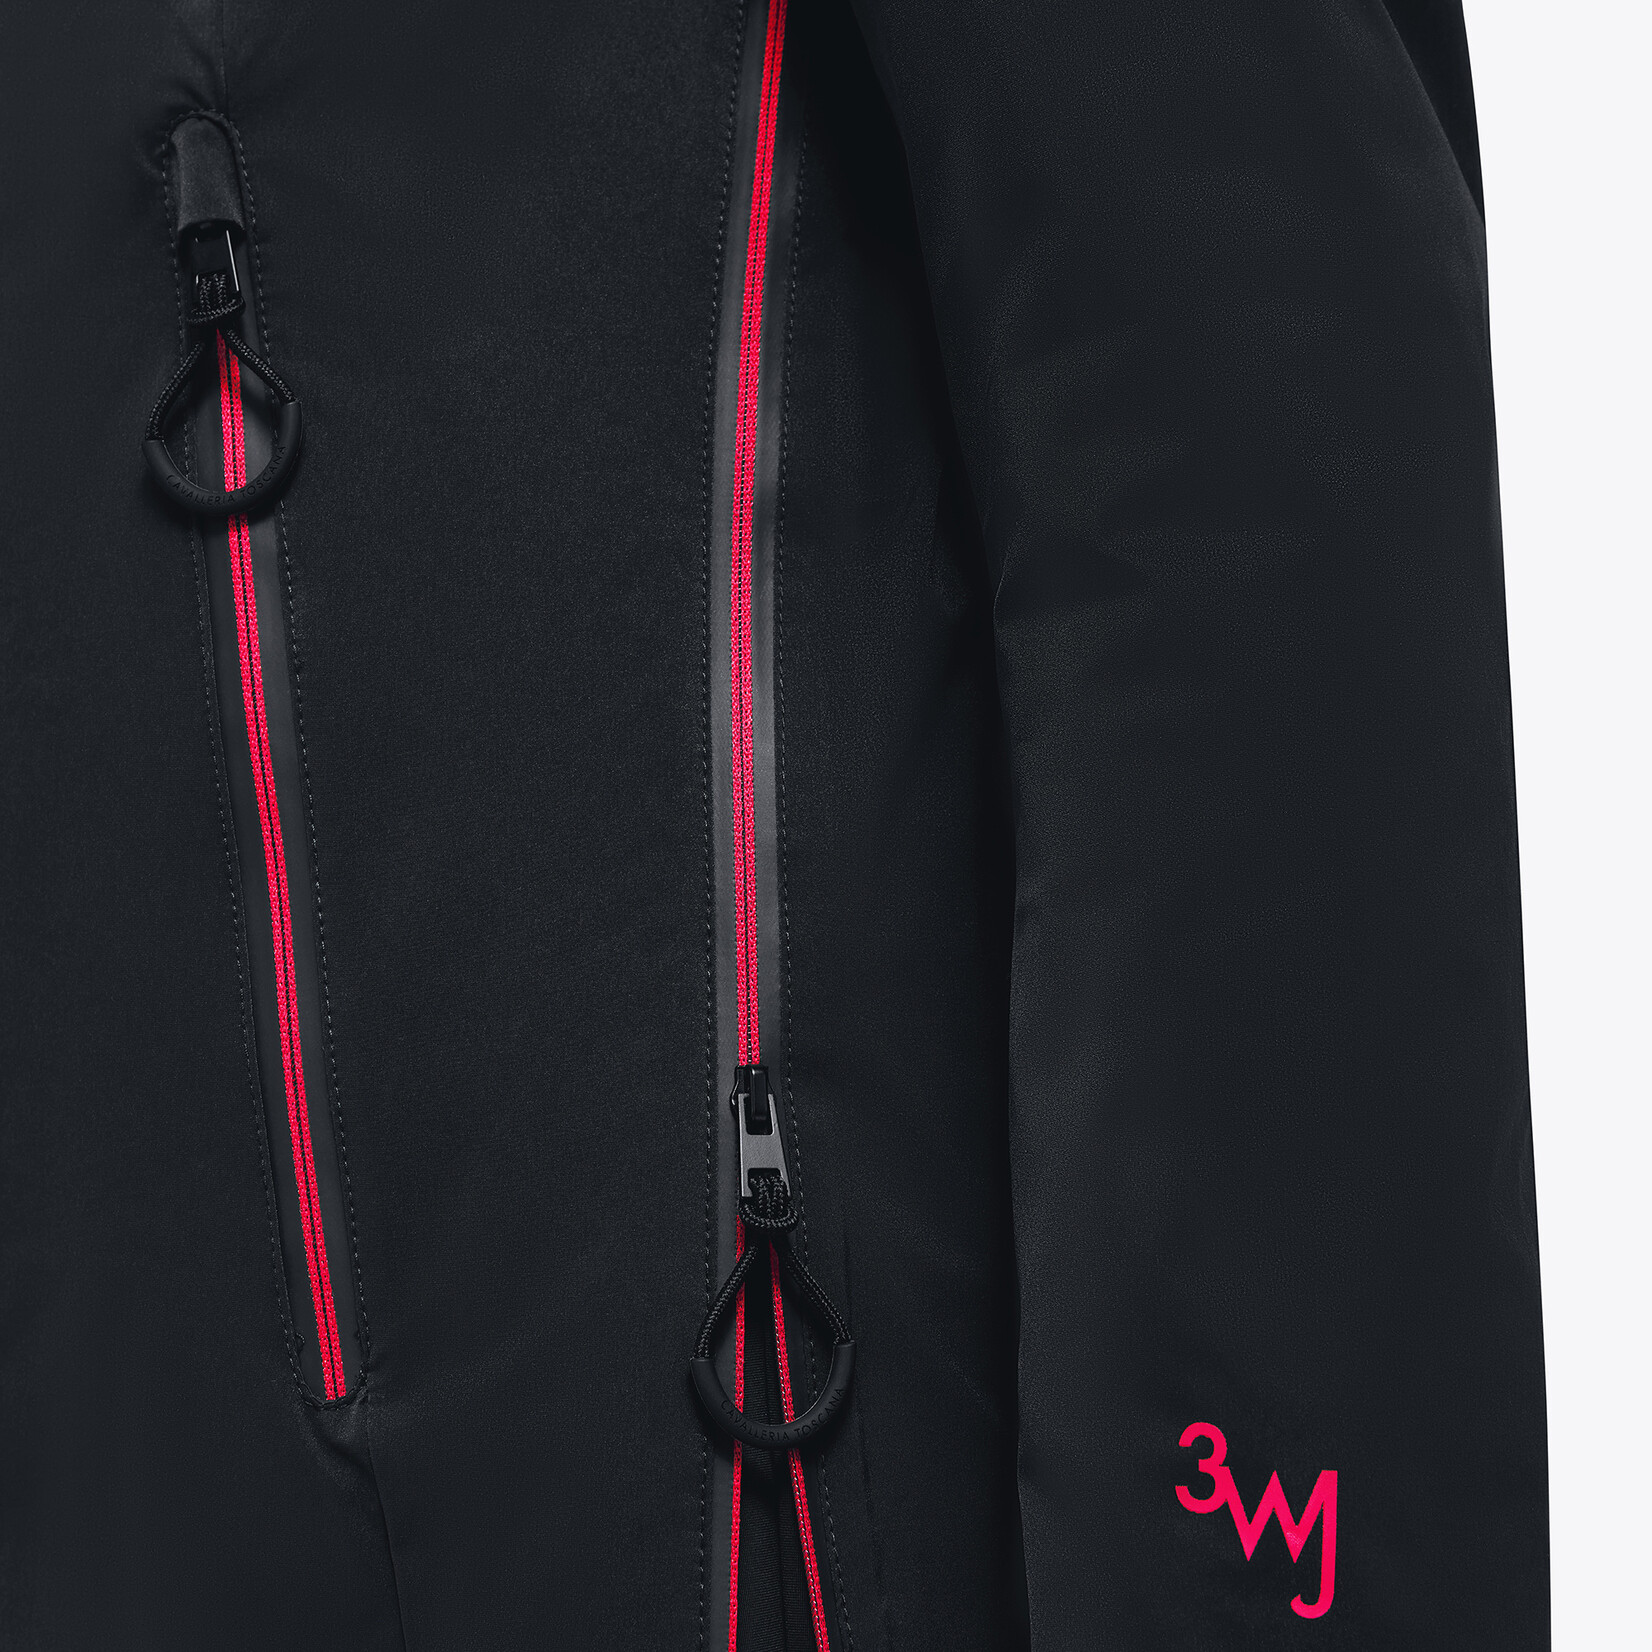 Cavalleria Toscana Cavalleria toscana revo 3-way waterproof jacket black